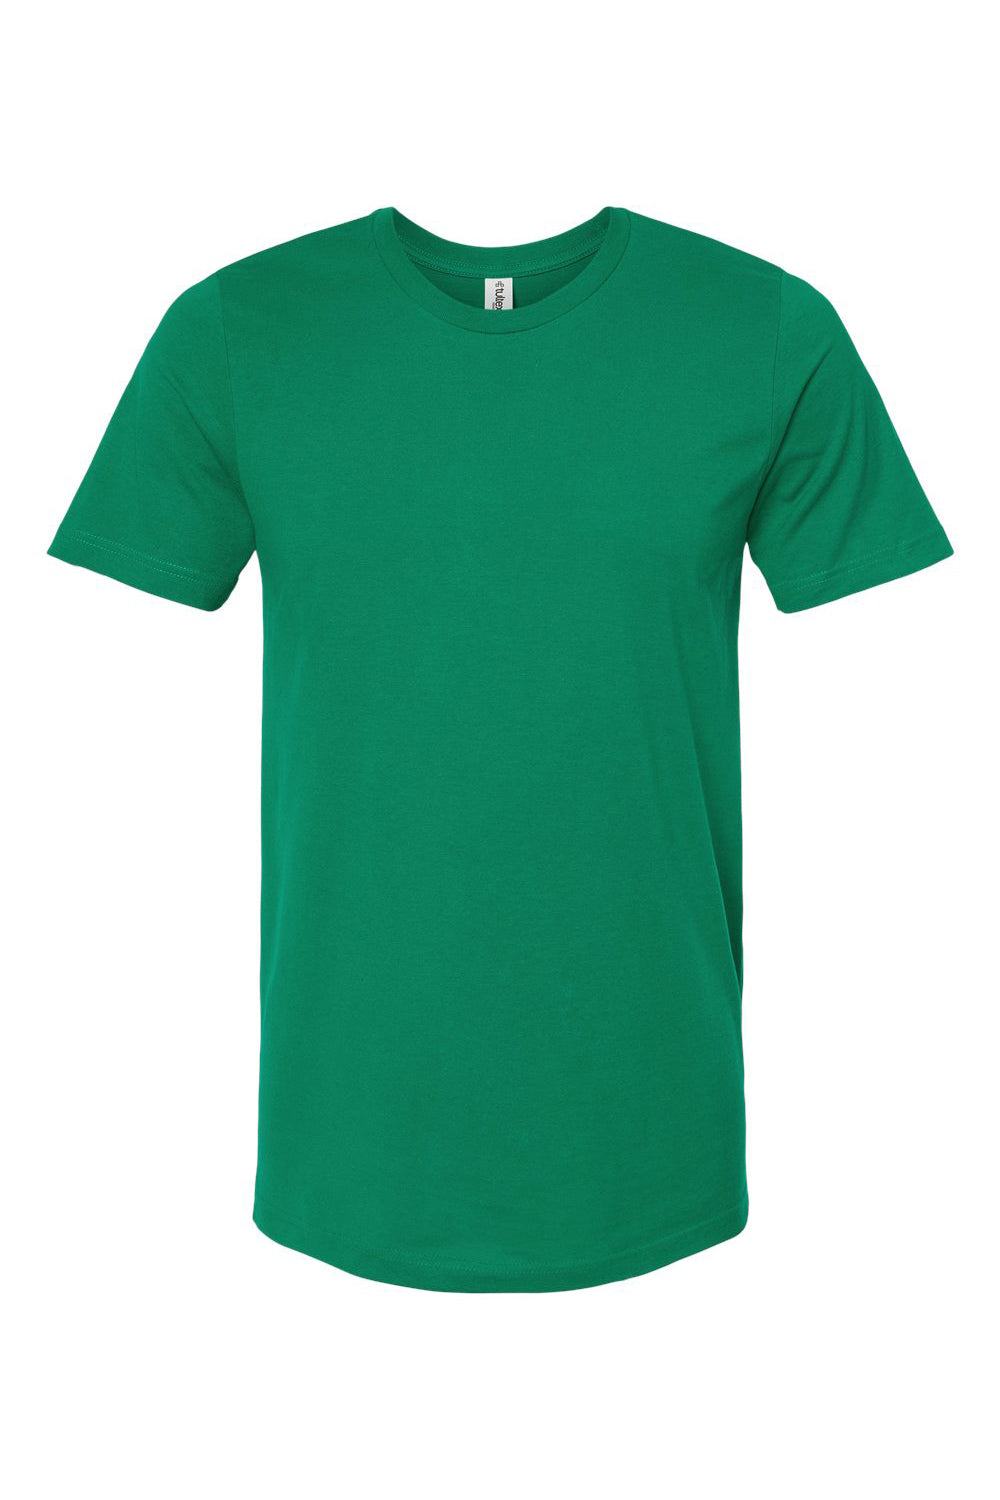 Tultex 602 Mens Short Sleeve Crewneck T-Shirt Kelly Green Flat Front